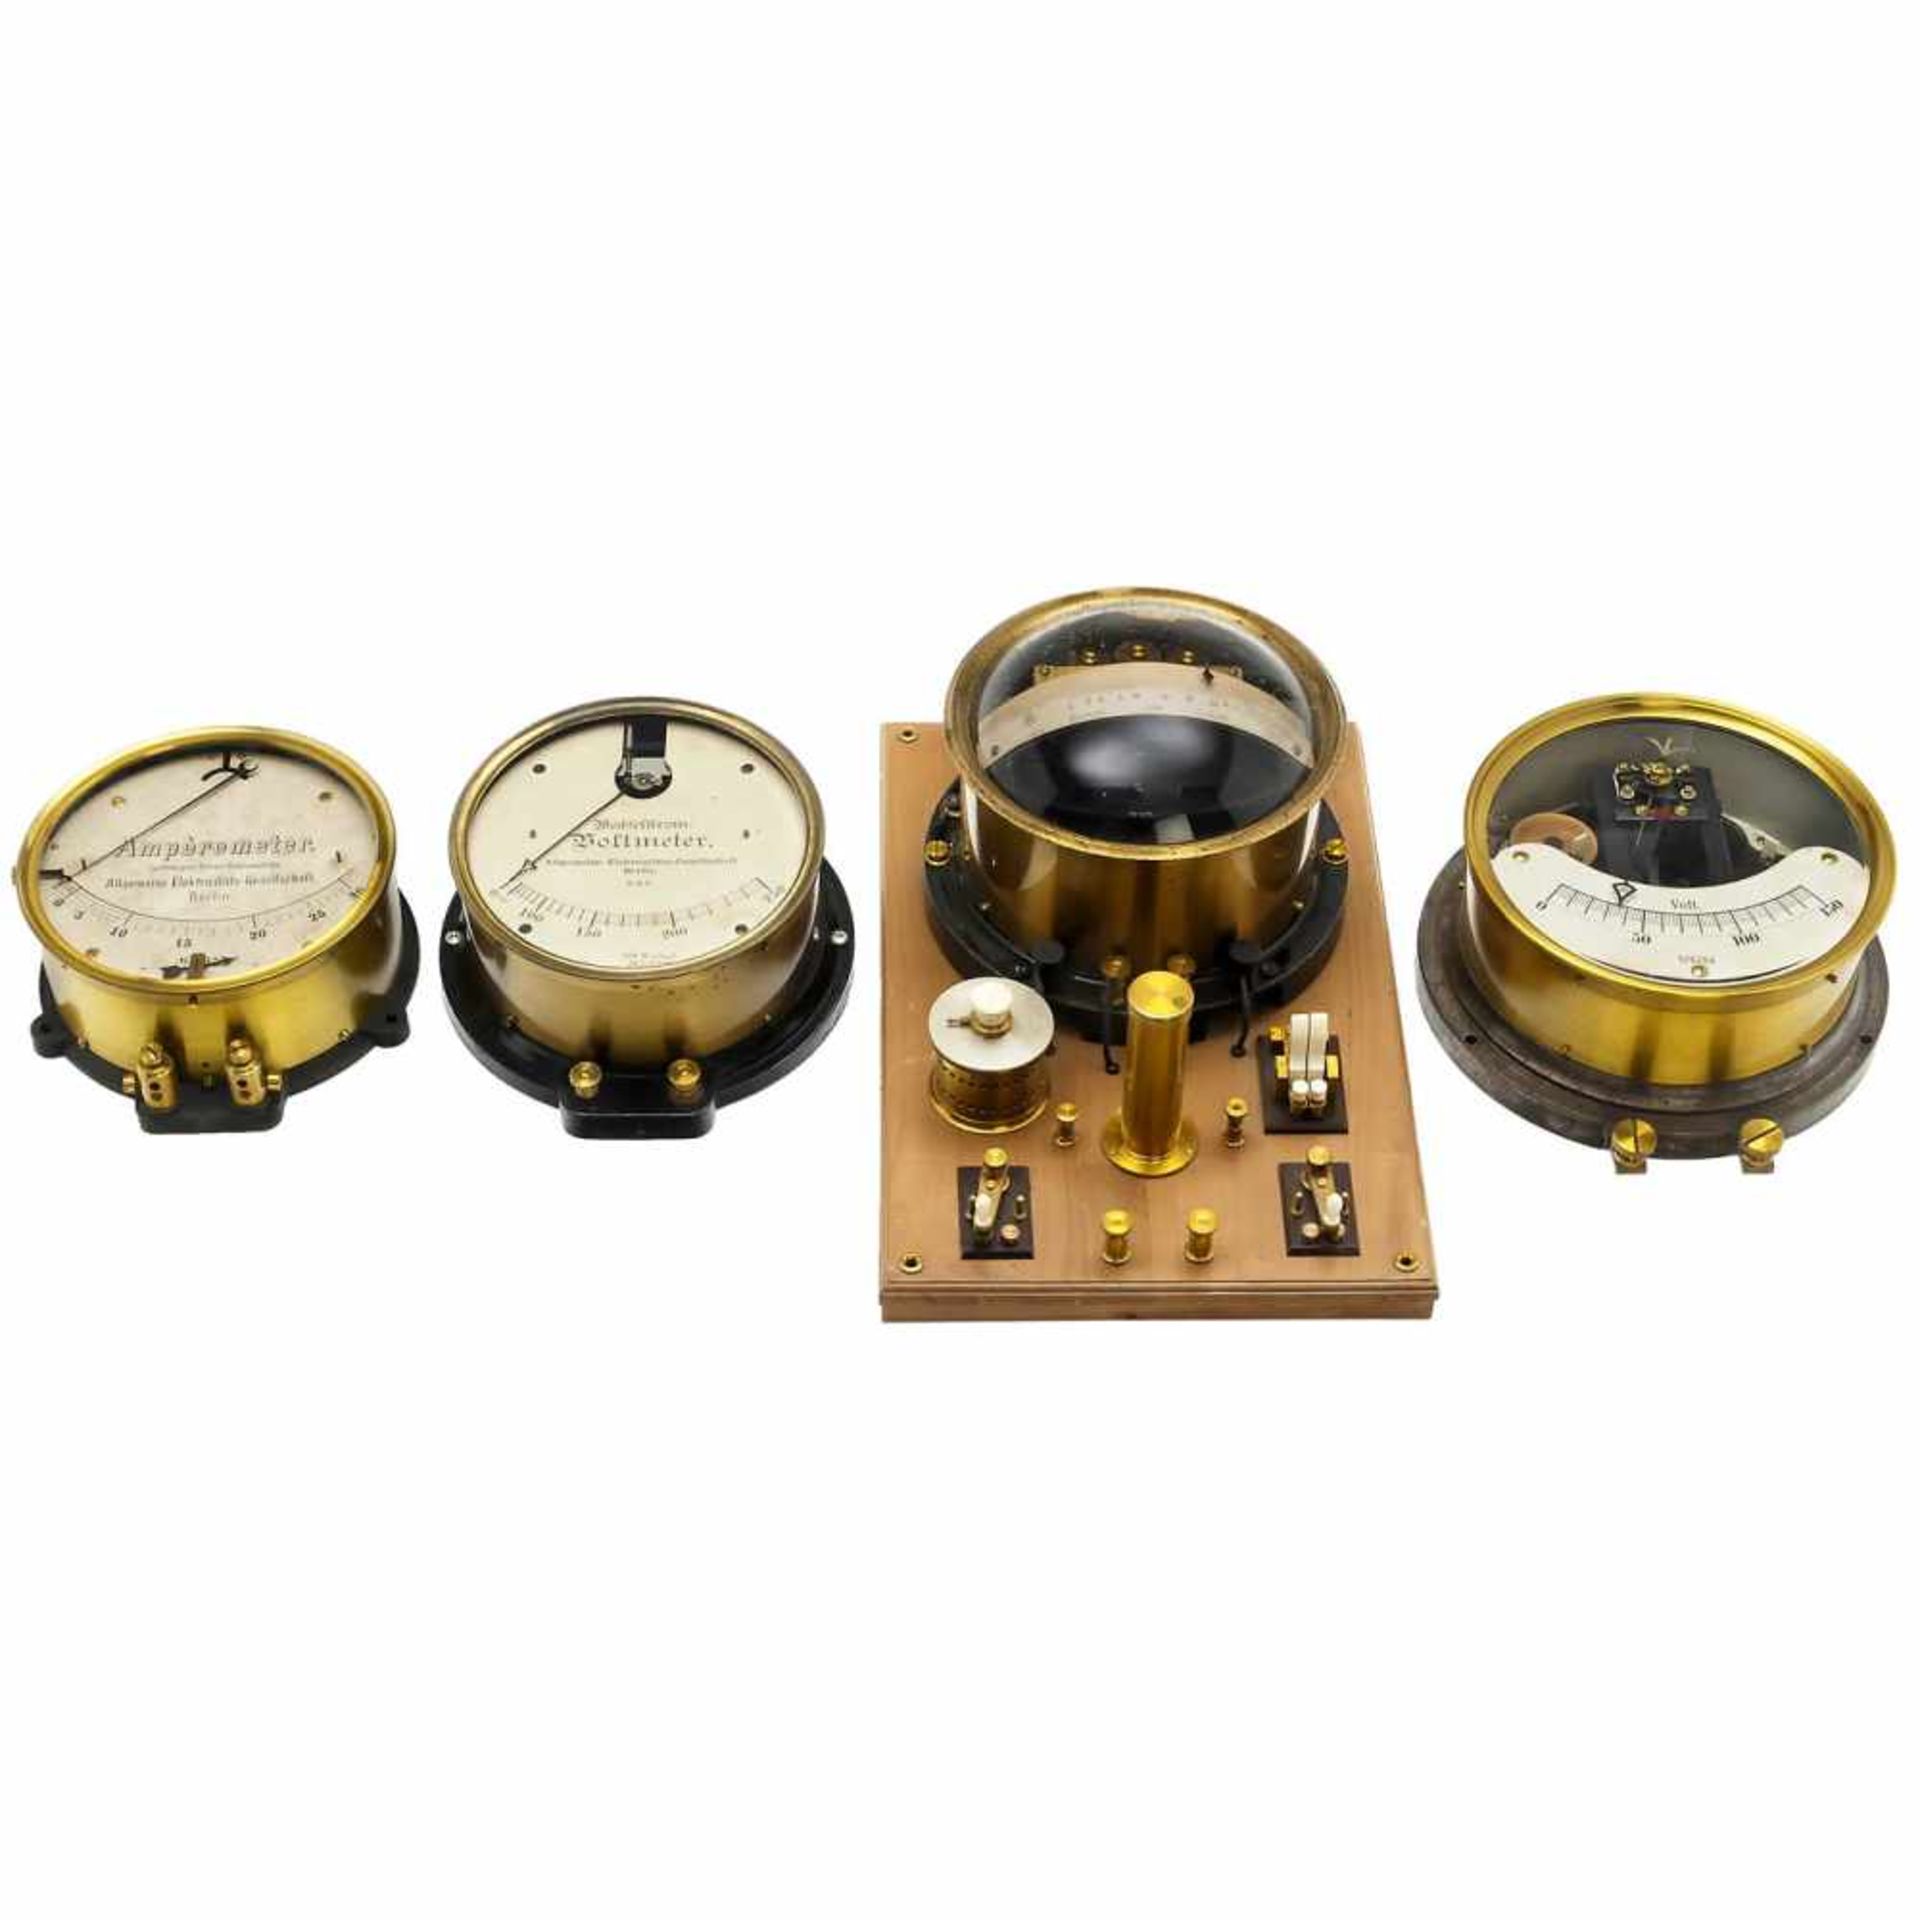 4 Large Brass Precision Measuring Instruments, c. 1900-19201) AC voltmeter, AEG, Berlin, Ø 8 ¾ in. -